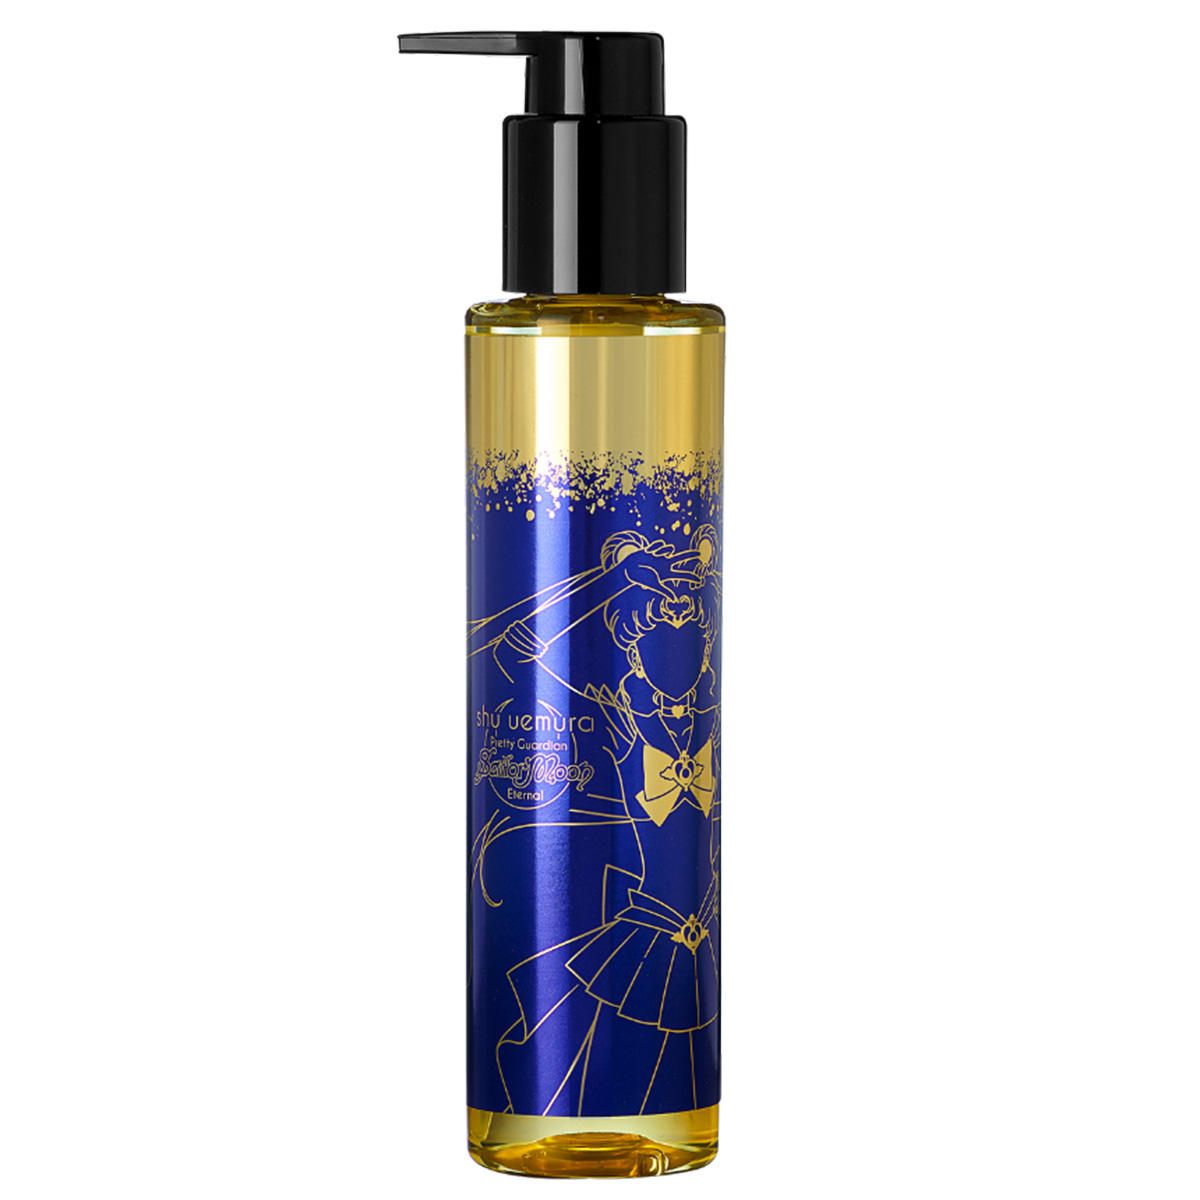 Shu Uemura Essence Absolue Oil Sailor Moon Limited Edition 150 ml - 2